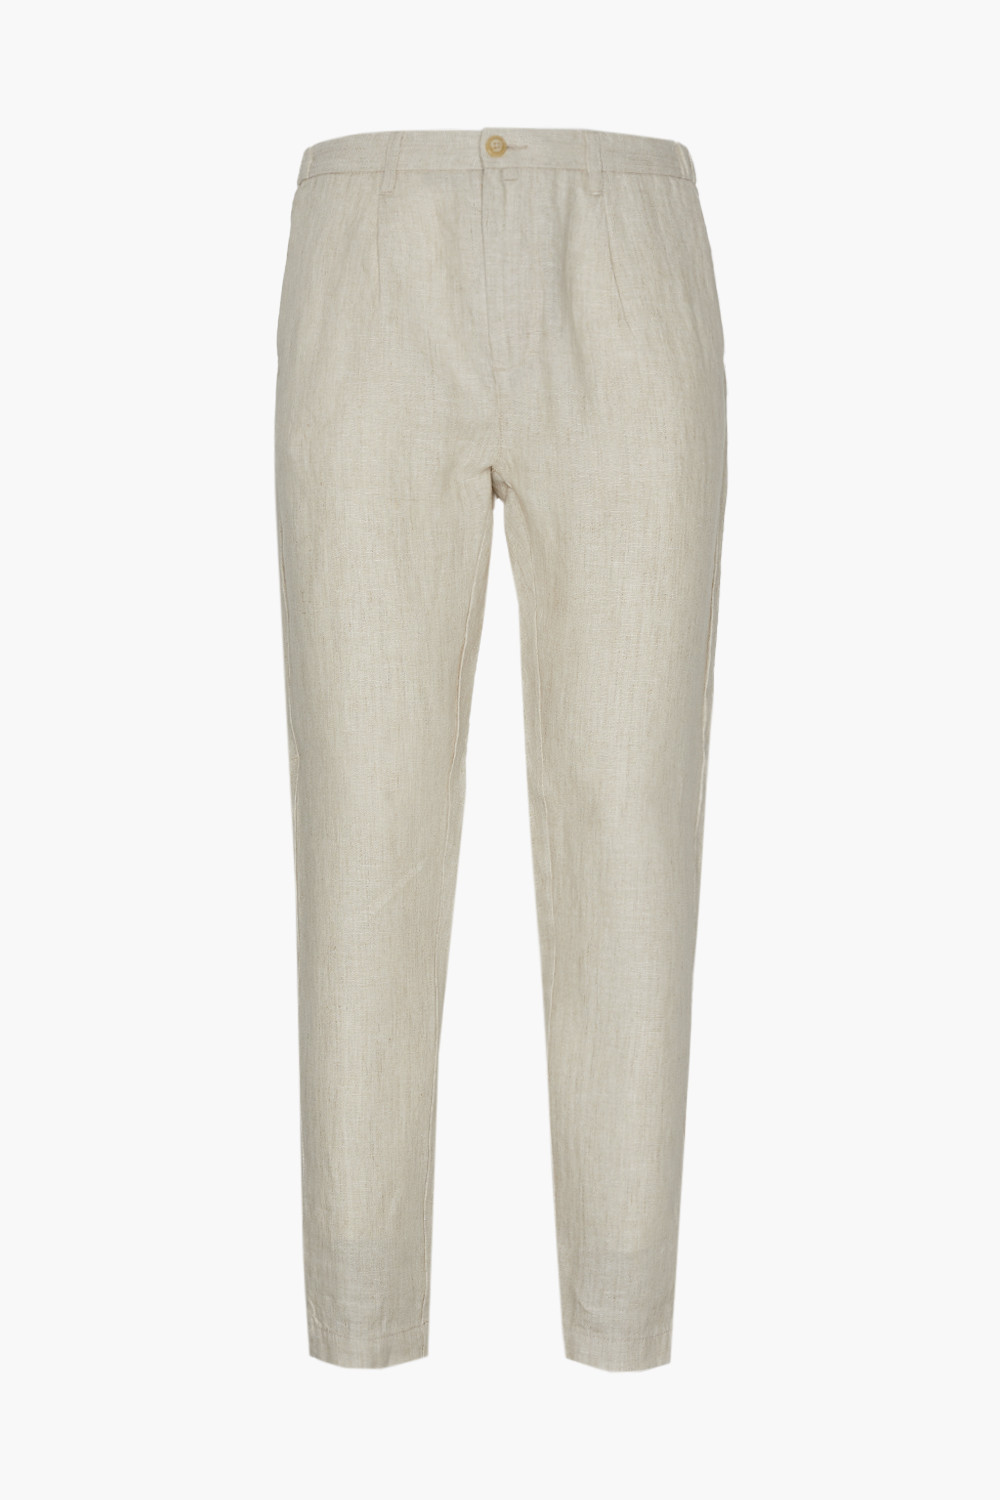 Pantaloni chinos 100% lino